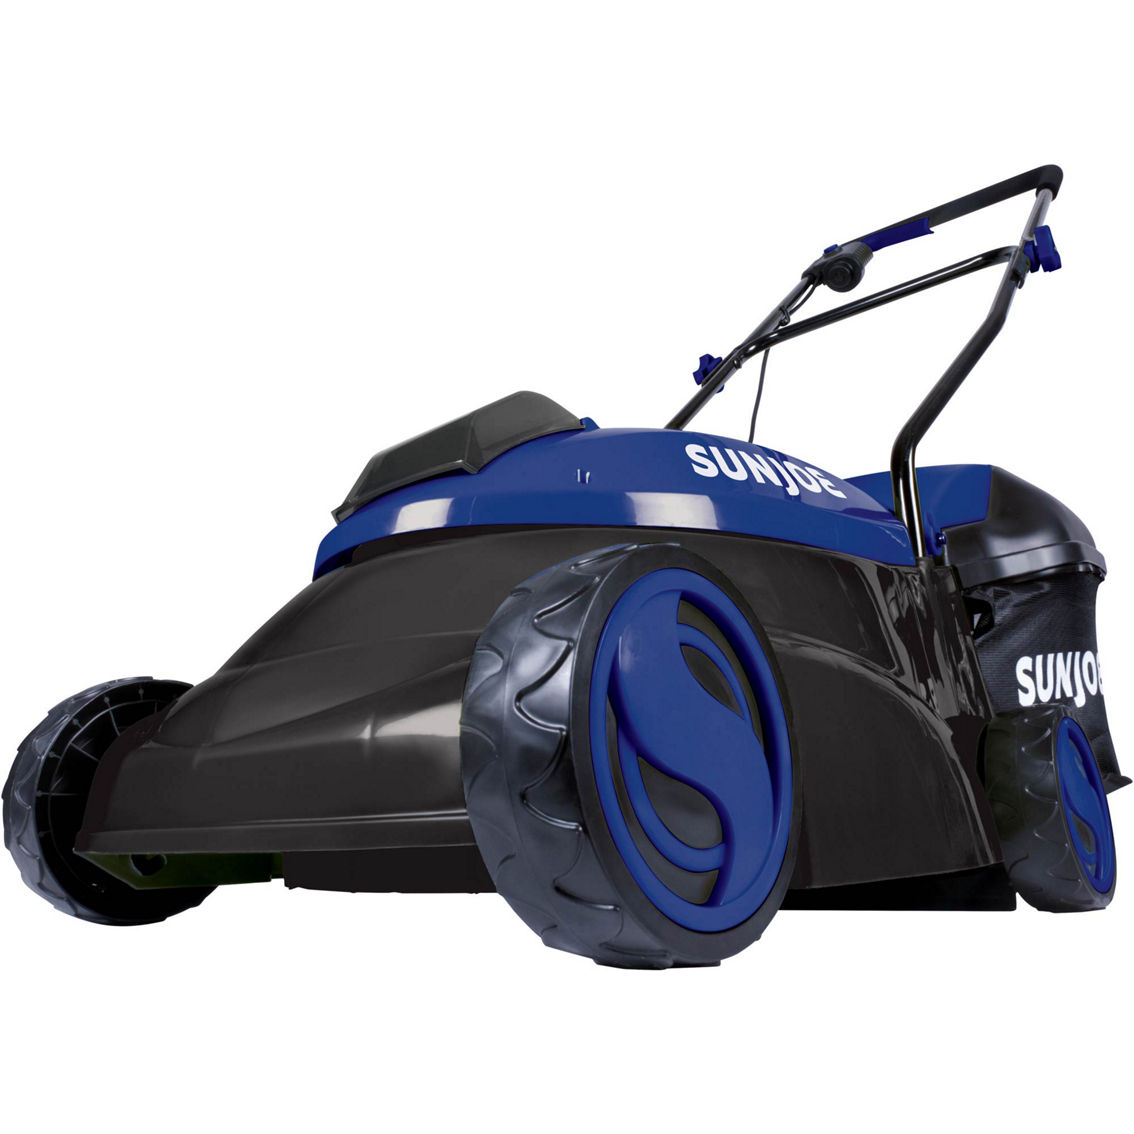 Sun Joe MJ401C-XR Cordless Lawn Mower with Brushless Motor - Image 3 of 3